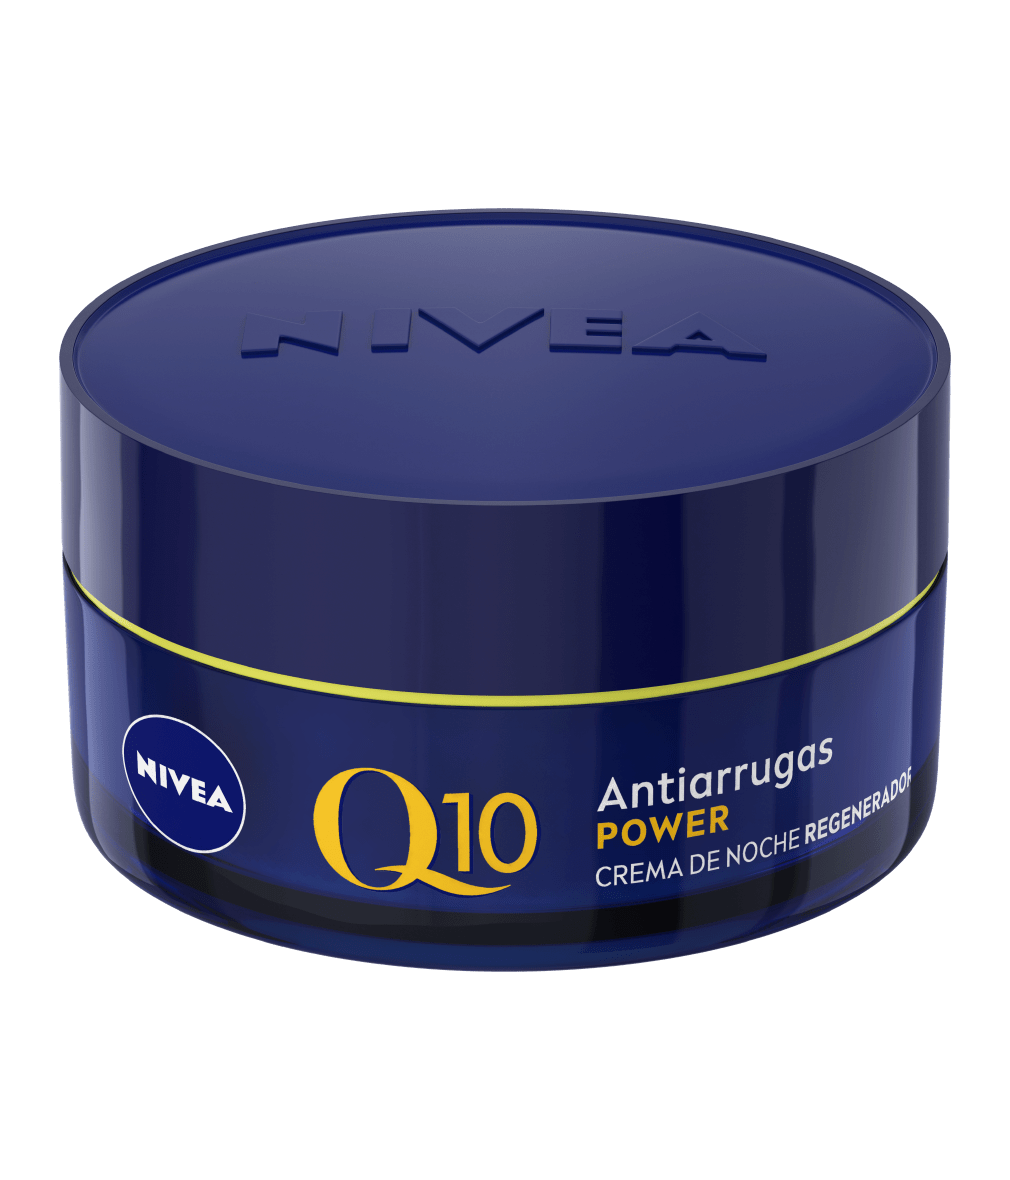 Q10 ANTIARRUGAS POWER Crema de Noche Regeneradora | NIVEA